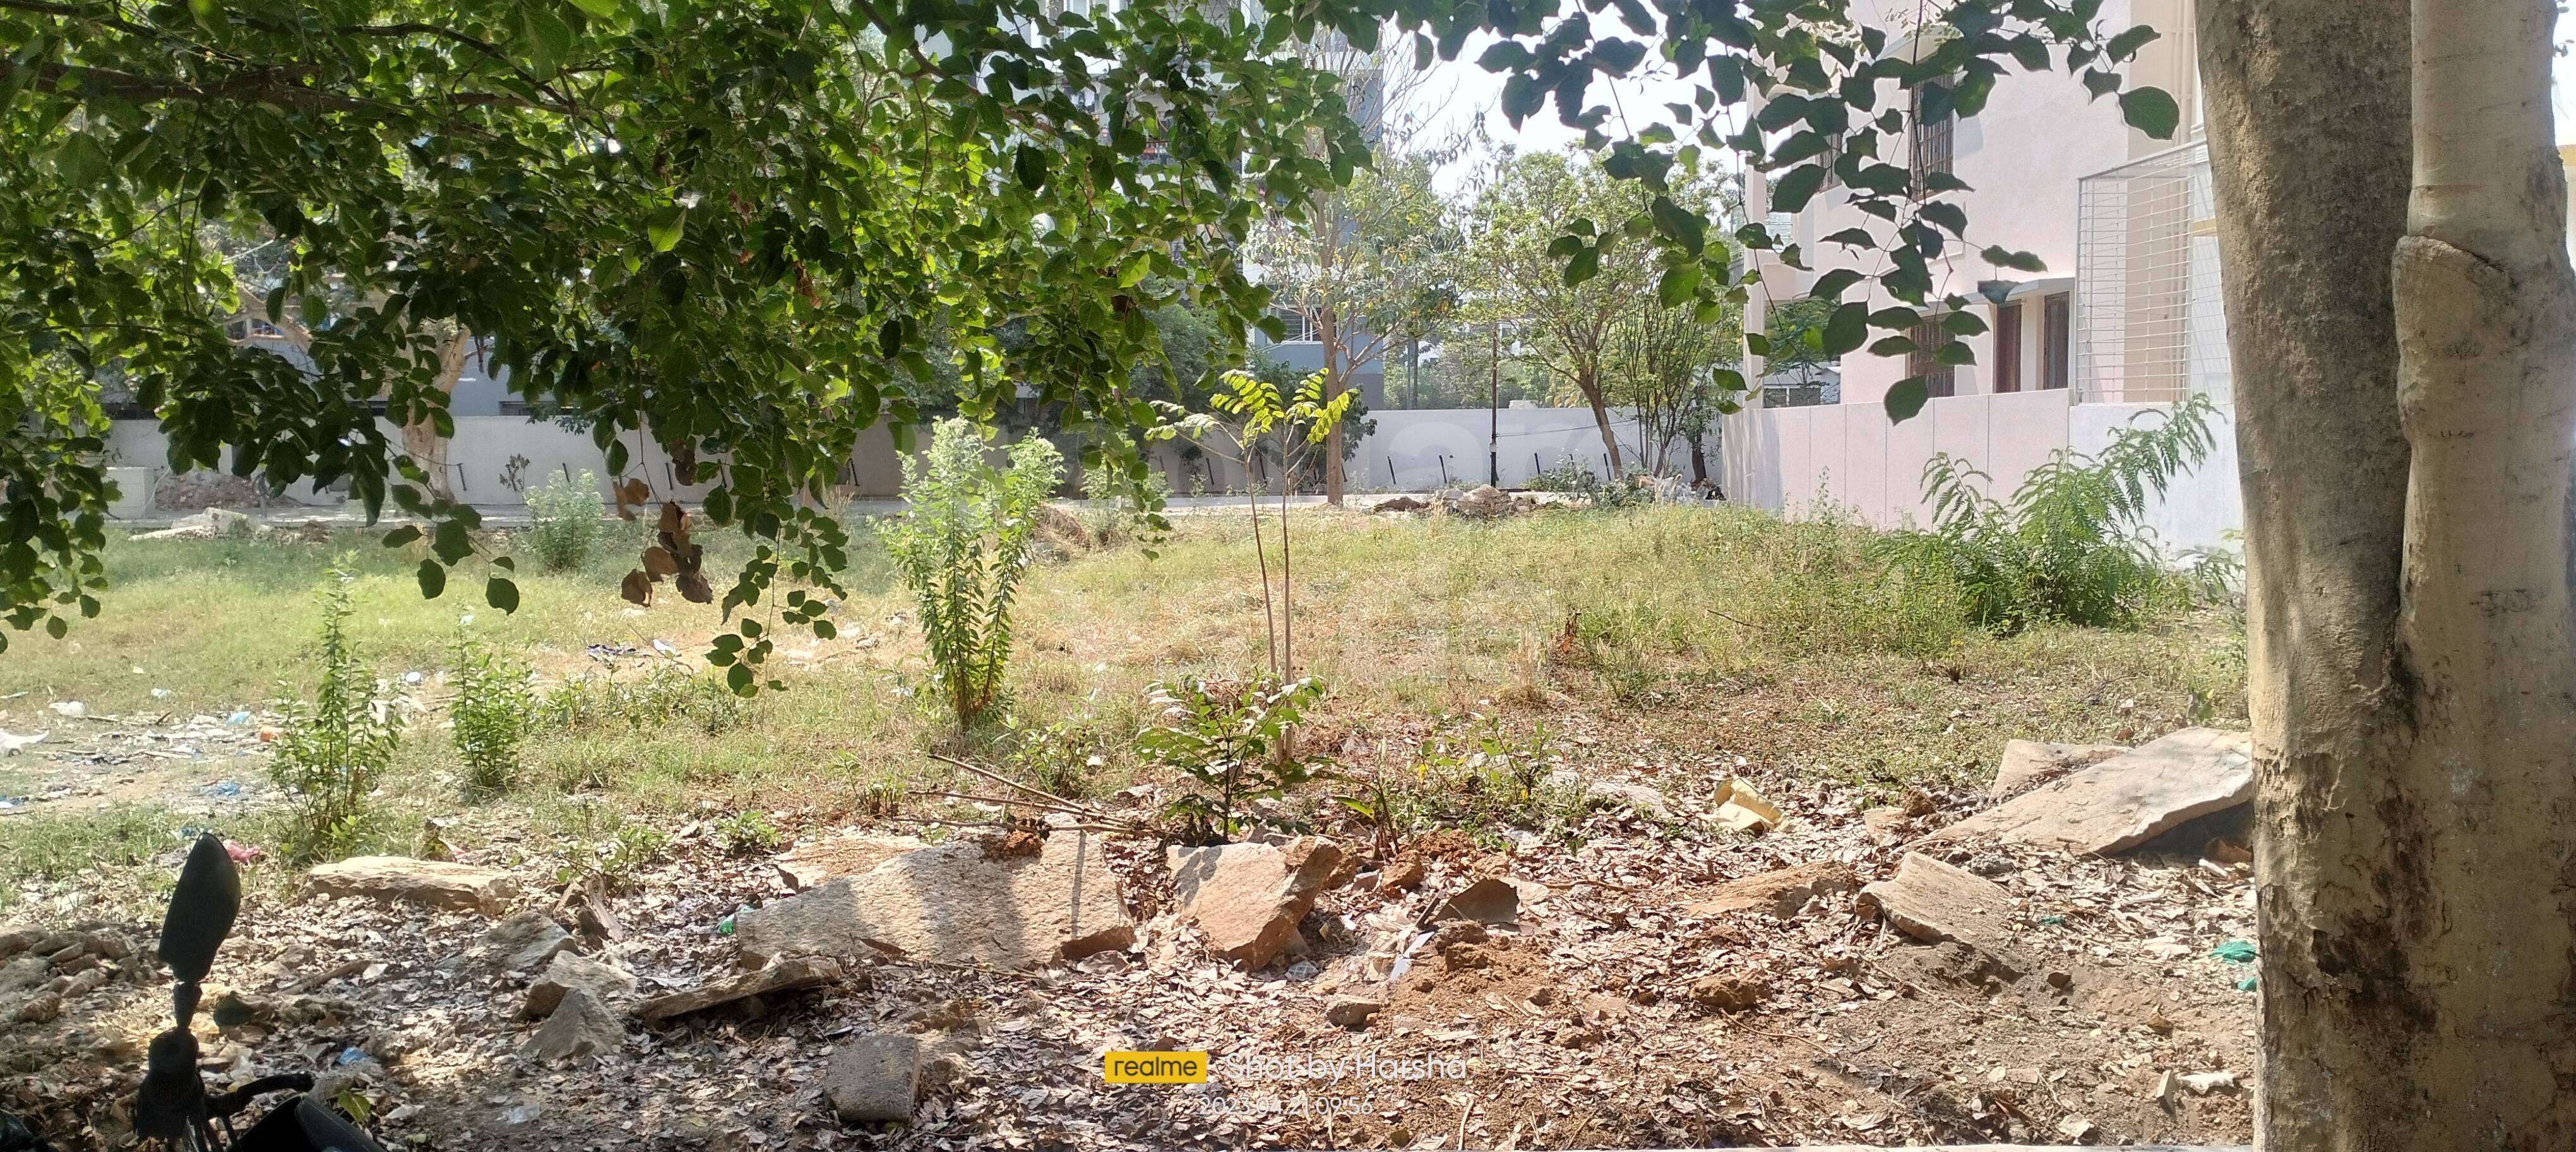 Land/Plots for Sale in Harlur, Bangalore - 5 Resale land / Plots in Harlur